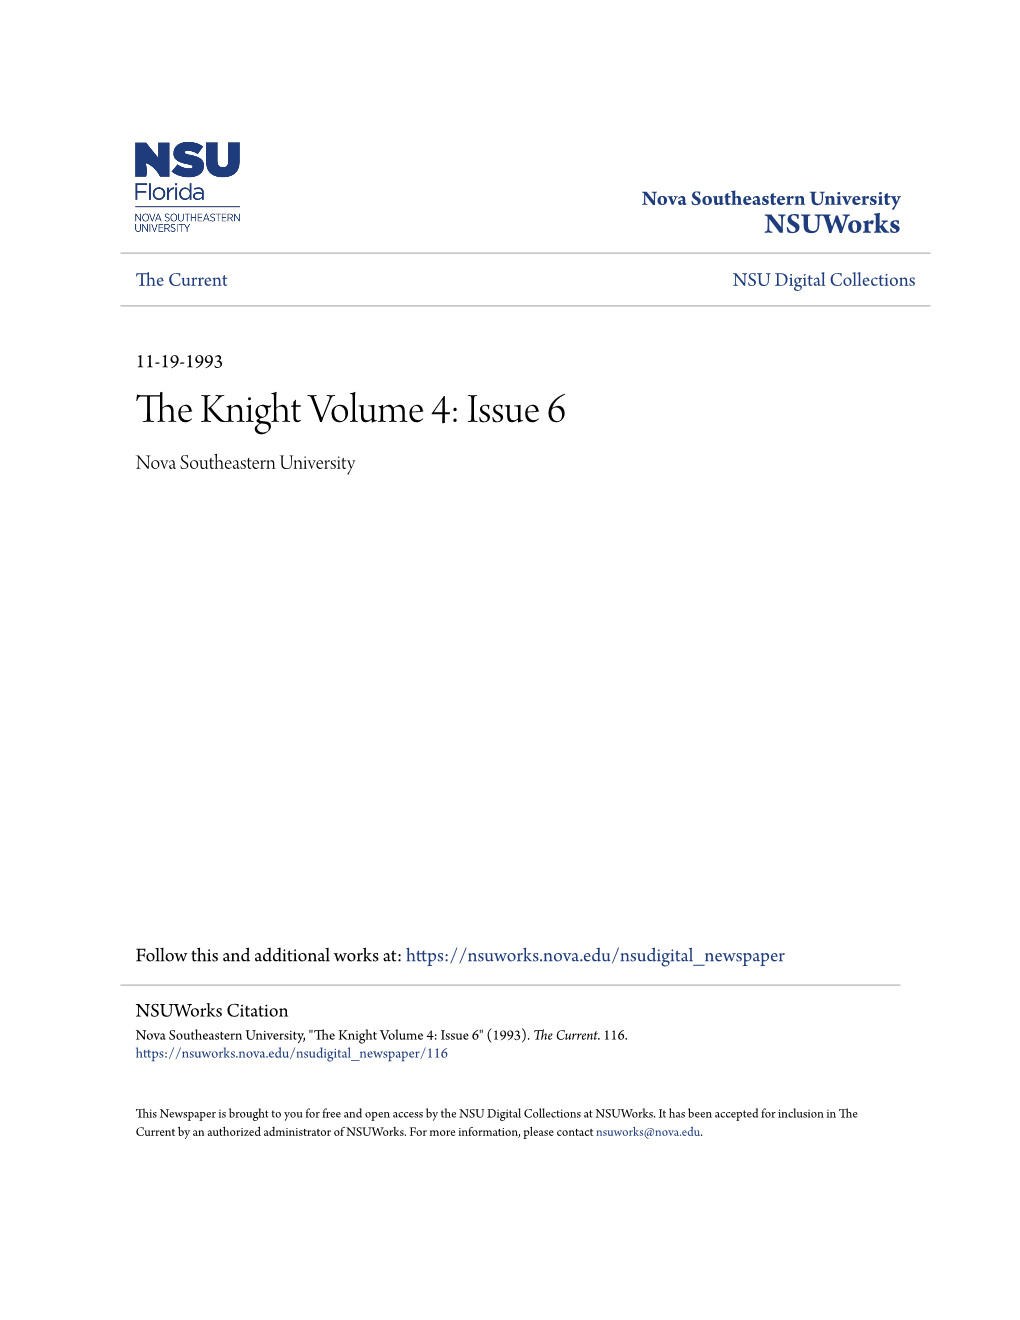 The Knight Volume 4: Issue 6 Nova Southeastern University